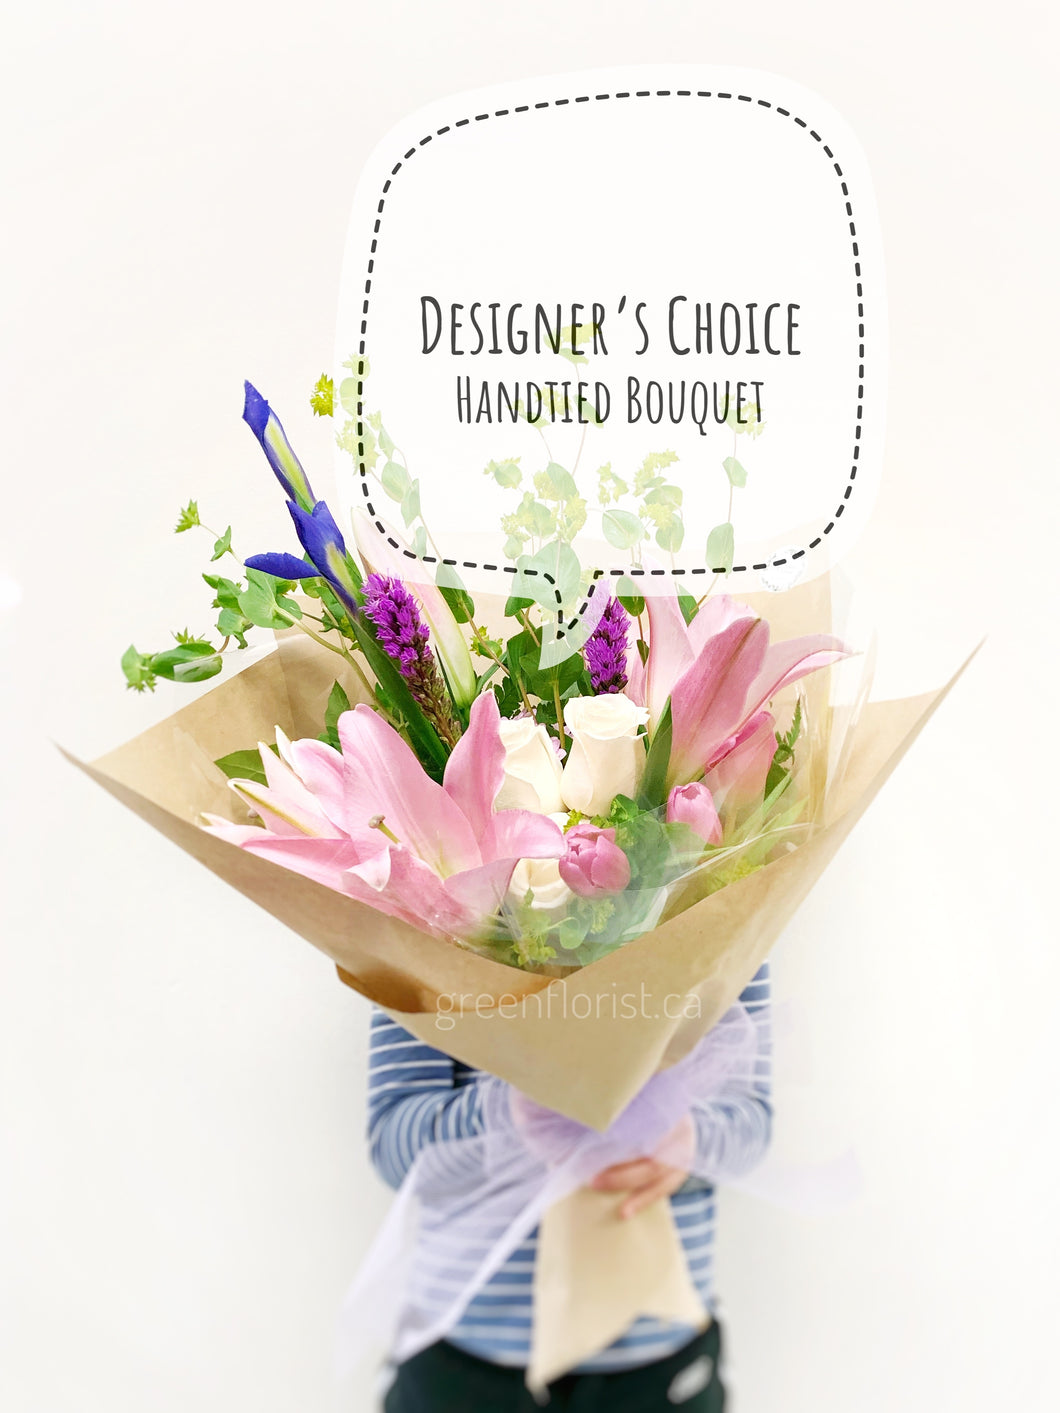 Designer’s Choice Hand-tied Bouquet